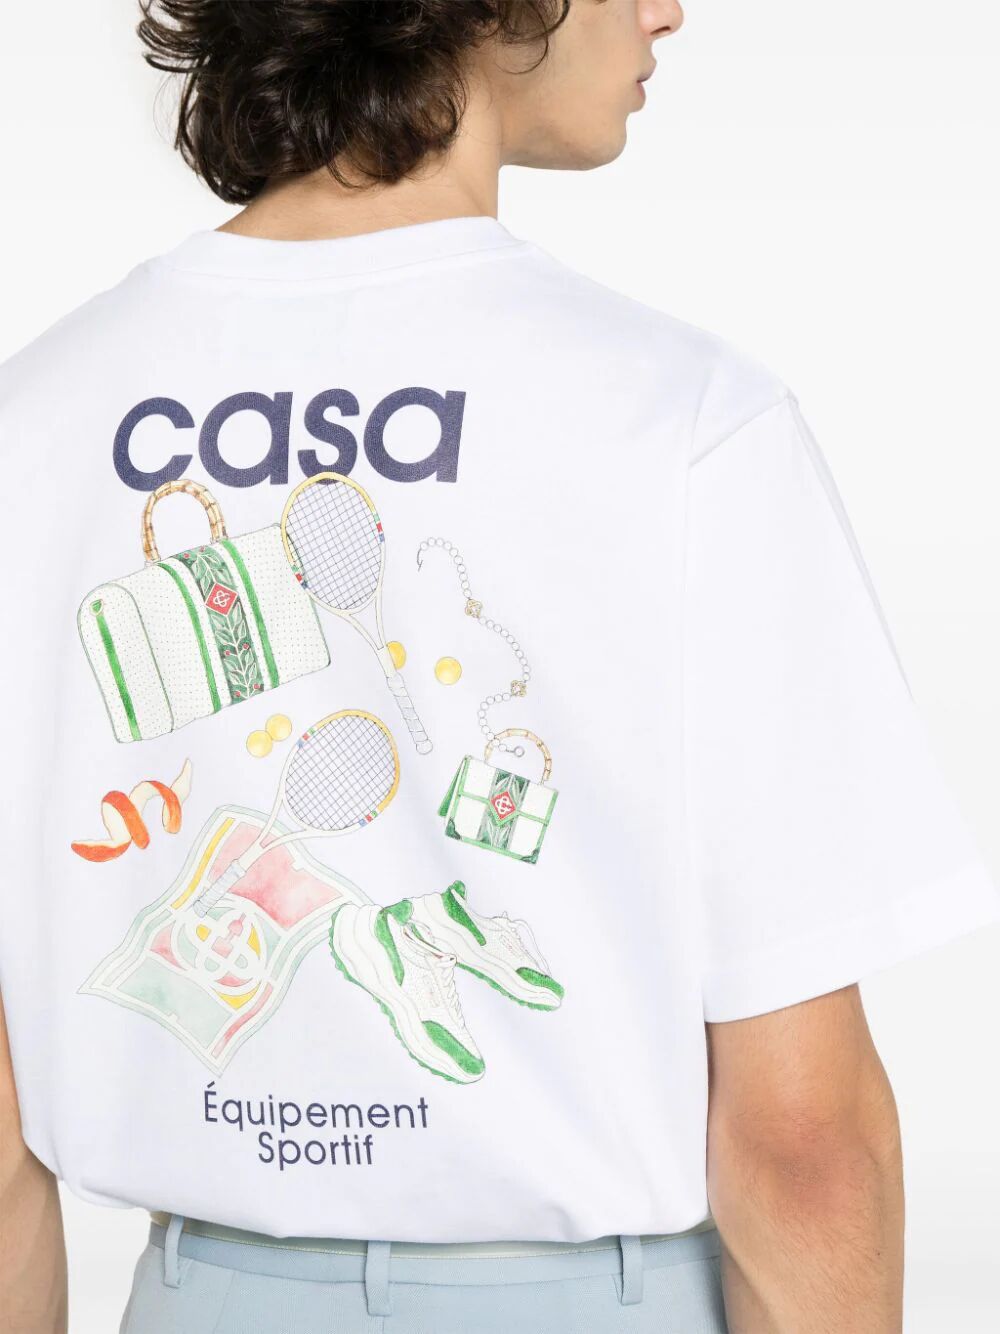 Equipment Sportif Printed Unisex T-shirt